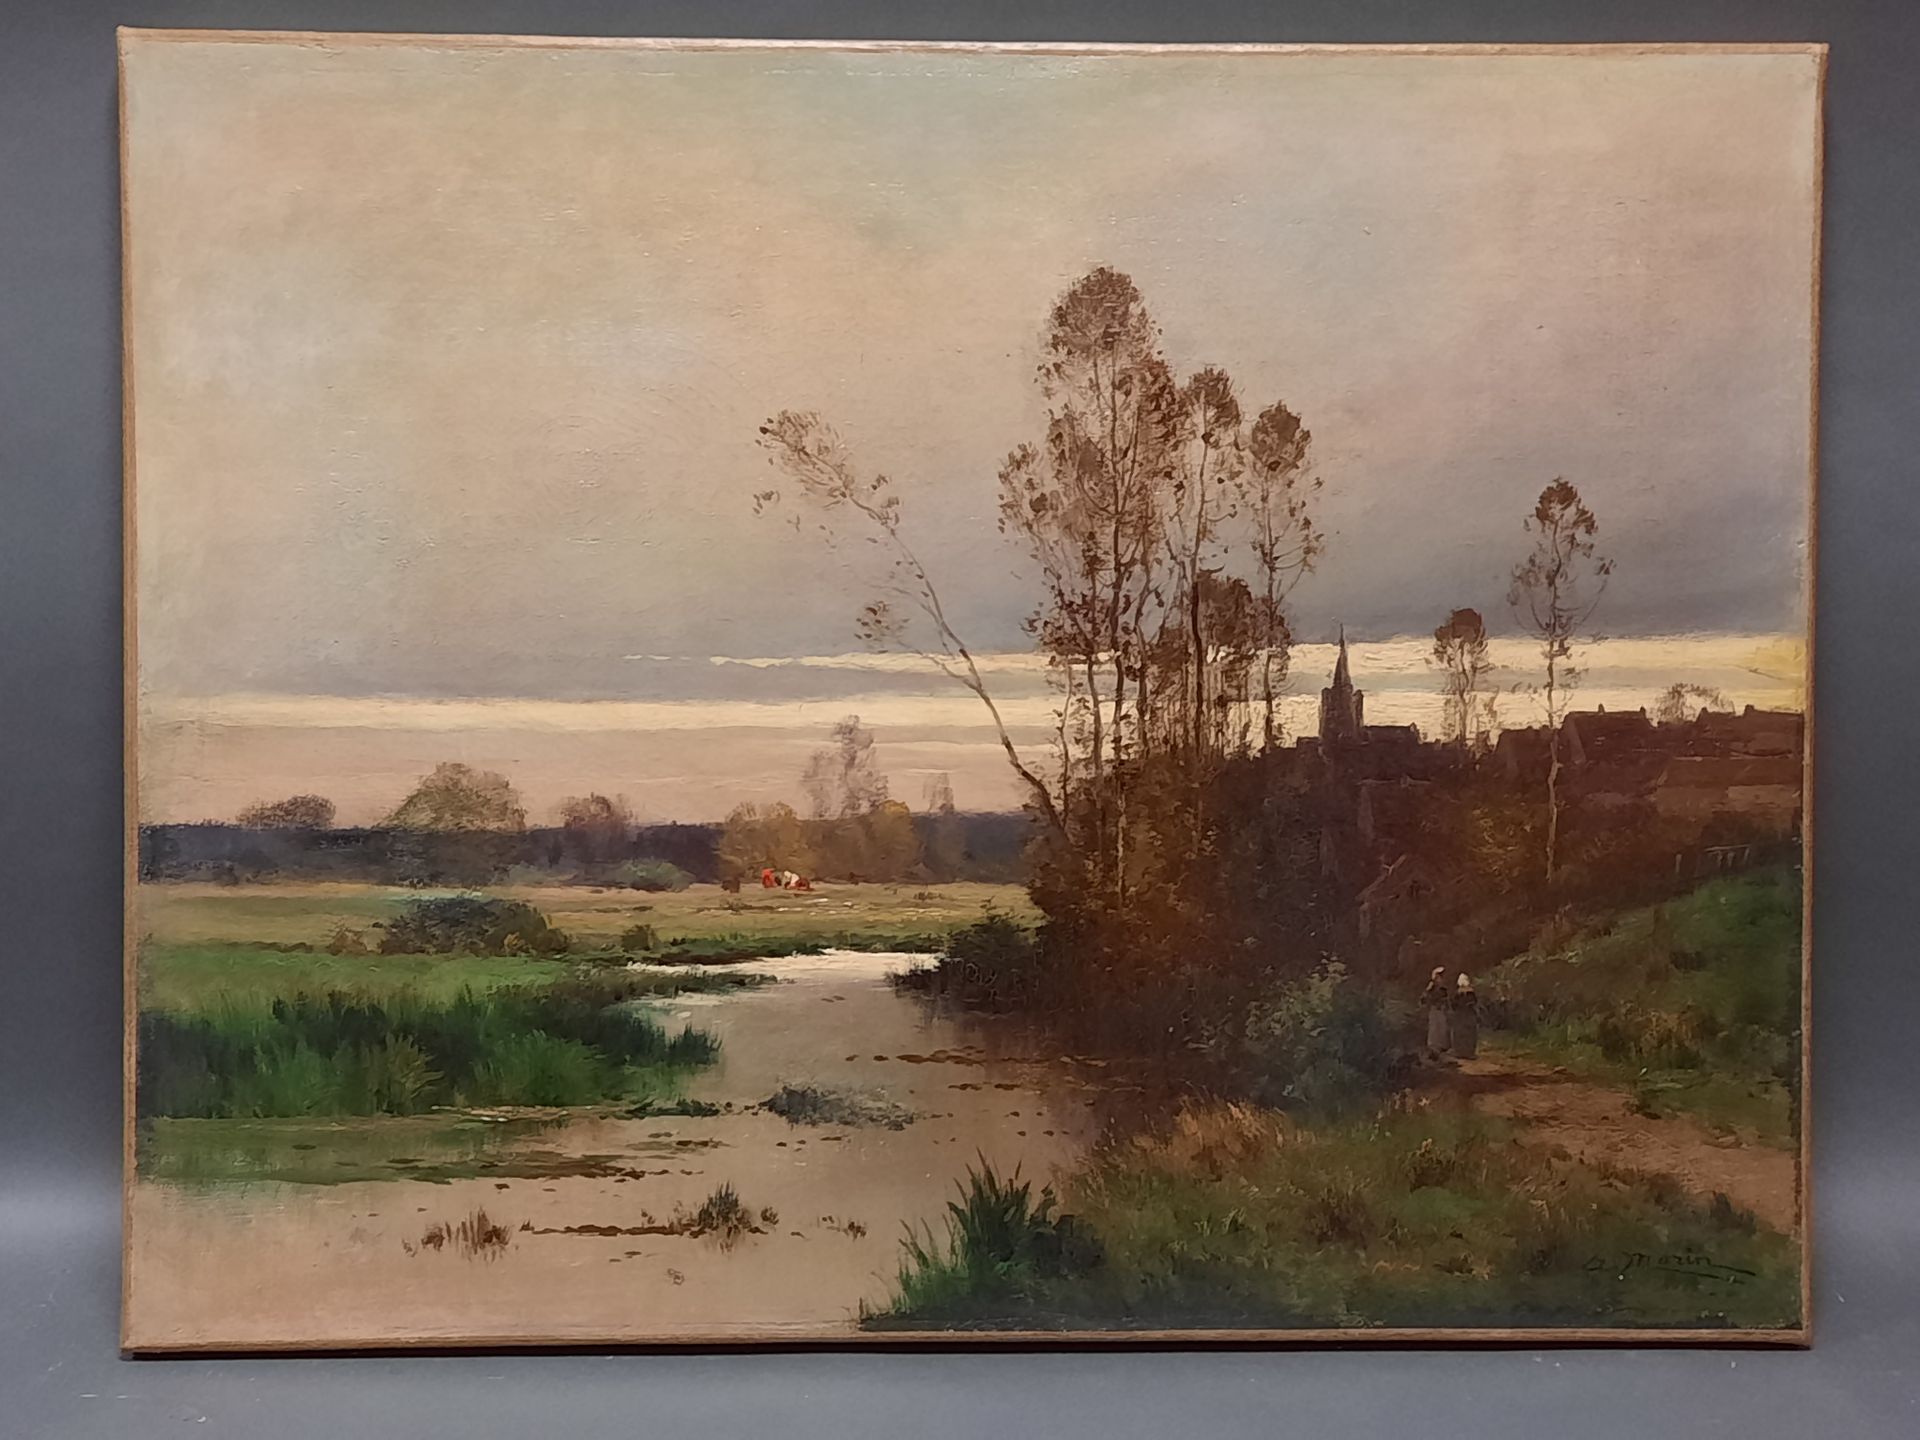 Null 阿道夫-莫林 (1841-约1880)

靠近河流的村庄

布面油画，右下角有签名

50 x 65厘米

无框架

鉴定：巴黎SASU Expert&hellip;